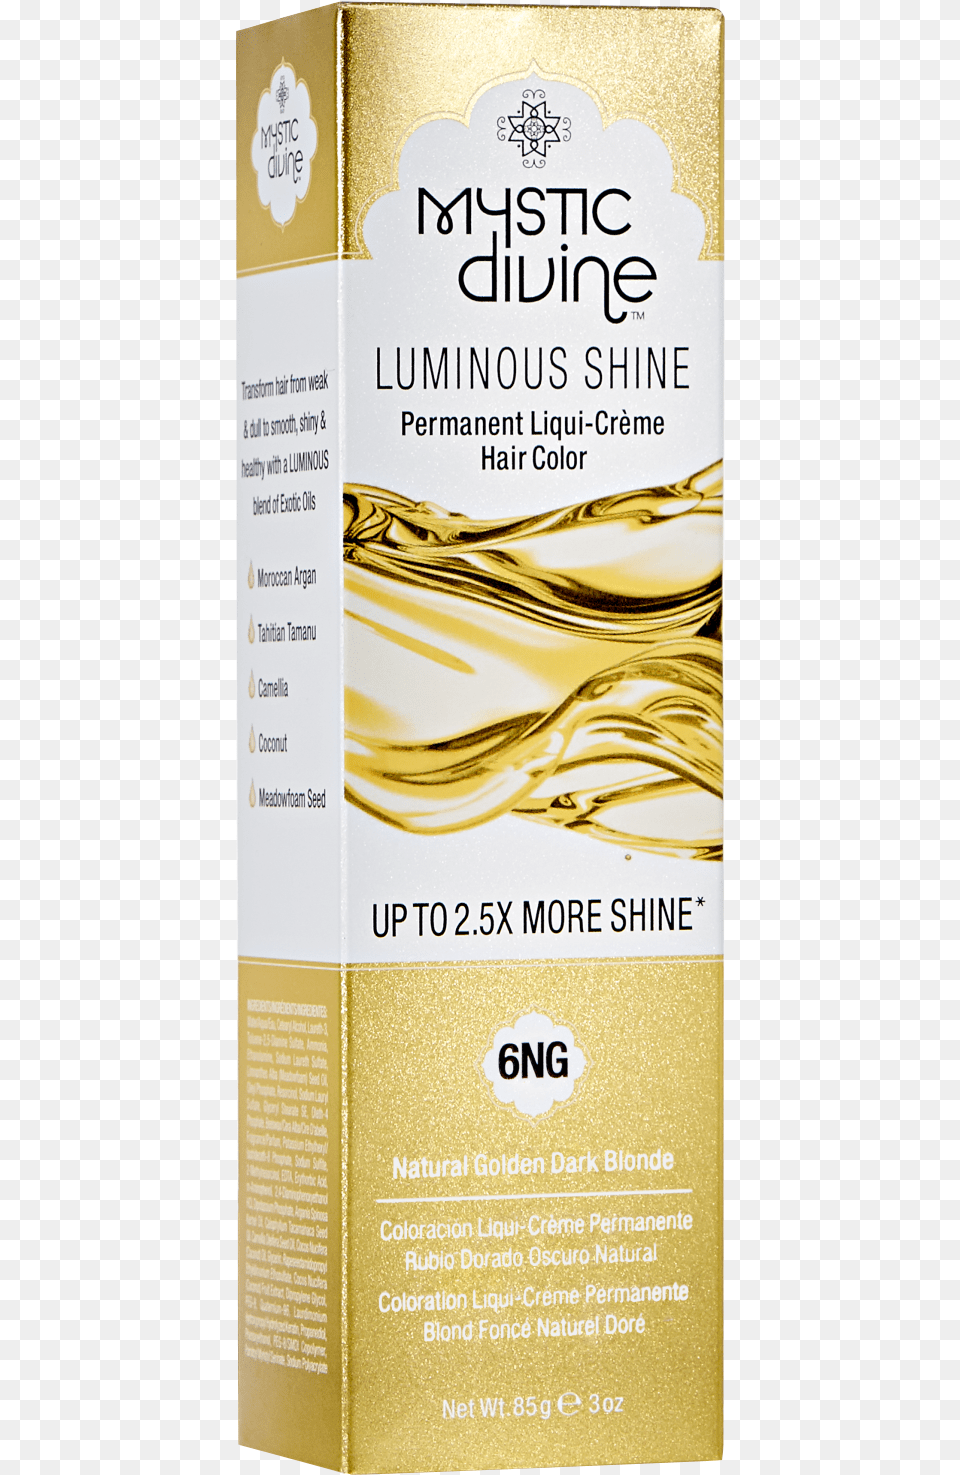 Natural Golden Dark Blonde Liqui Creme Permanent Mystic Divine Hair Color, Advertisement, Poster Png Image